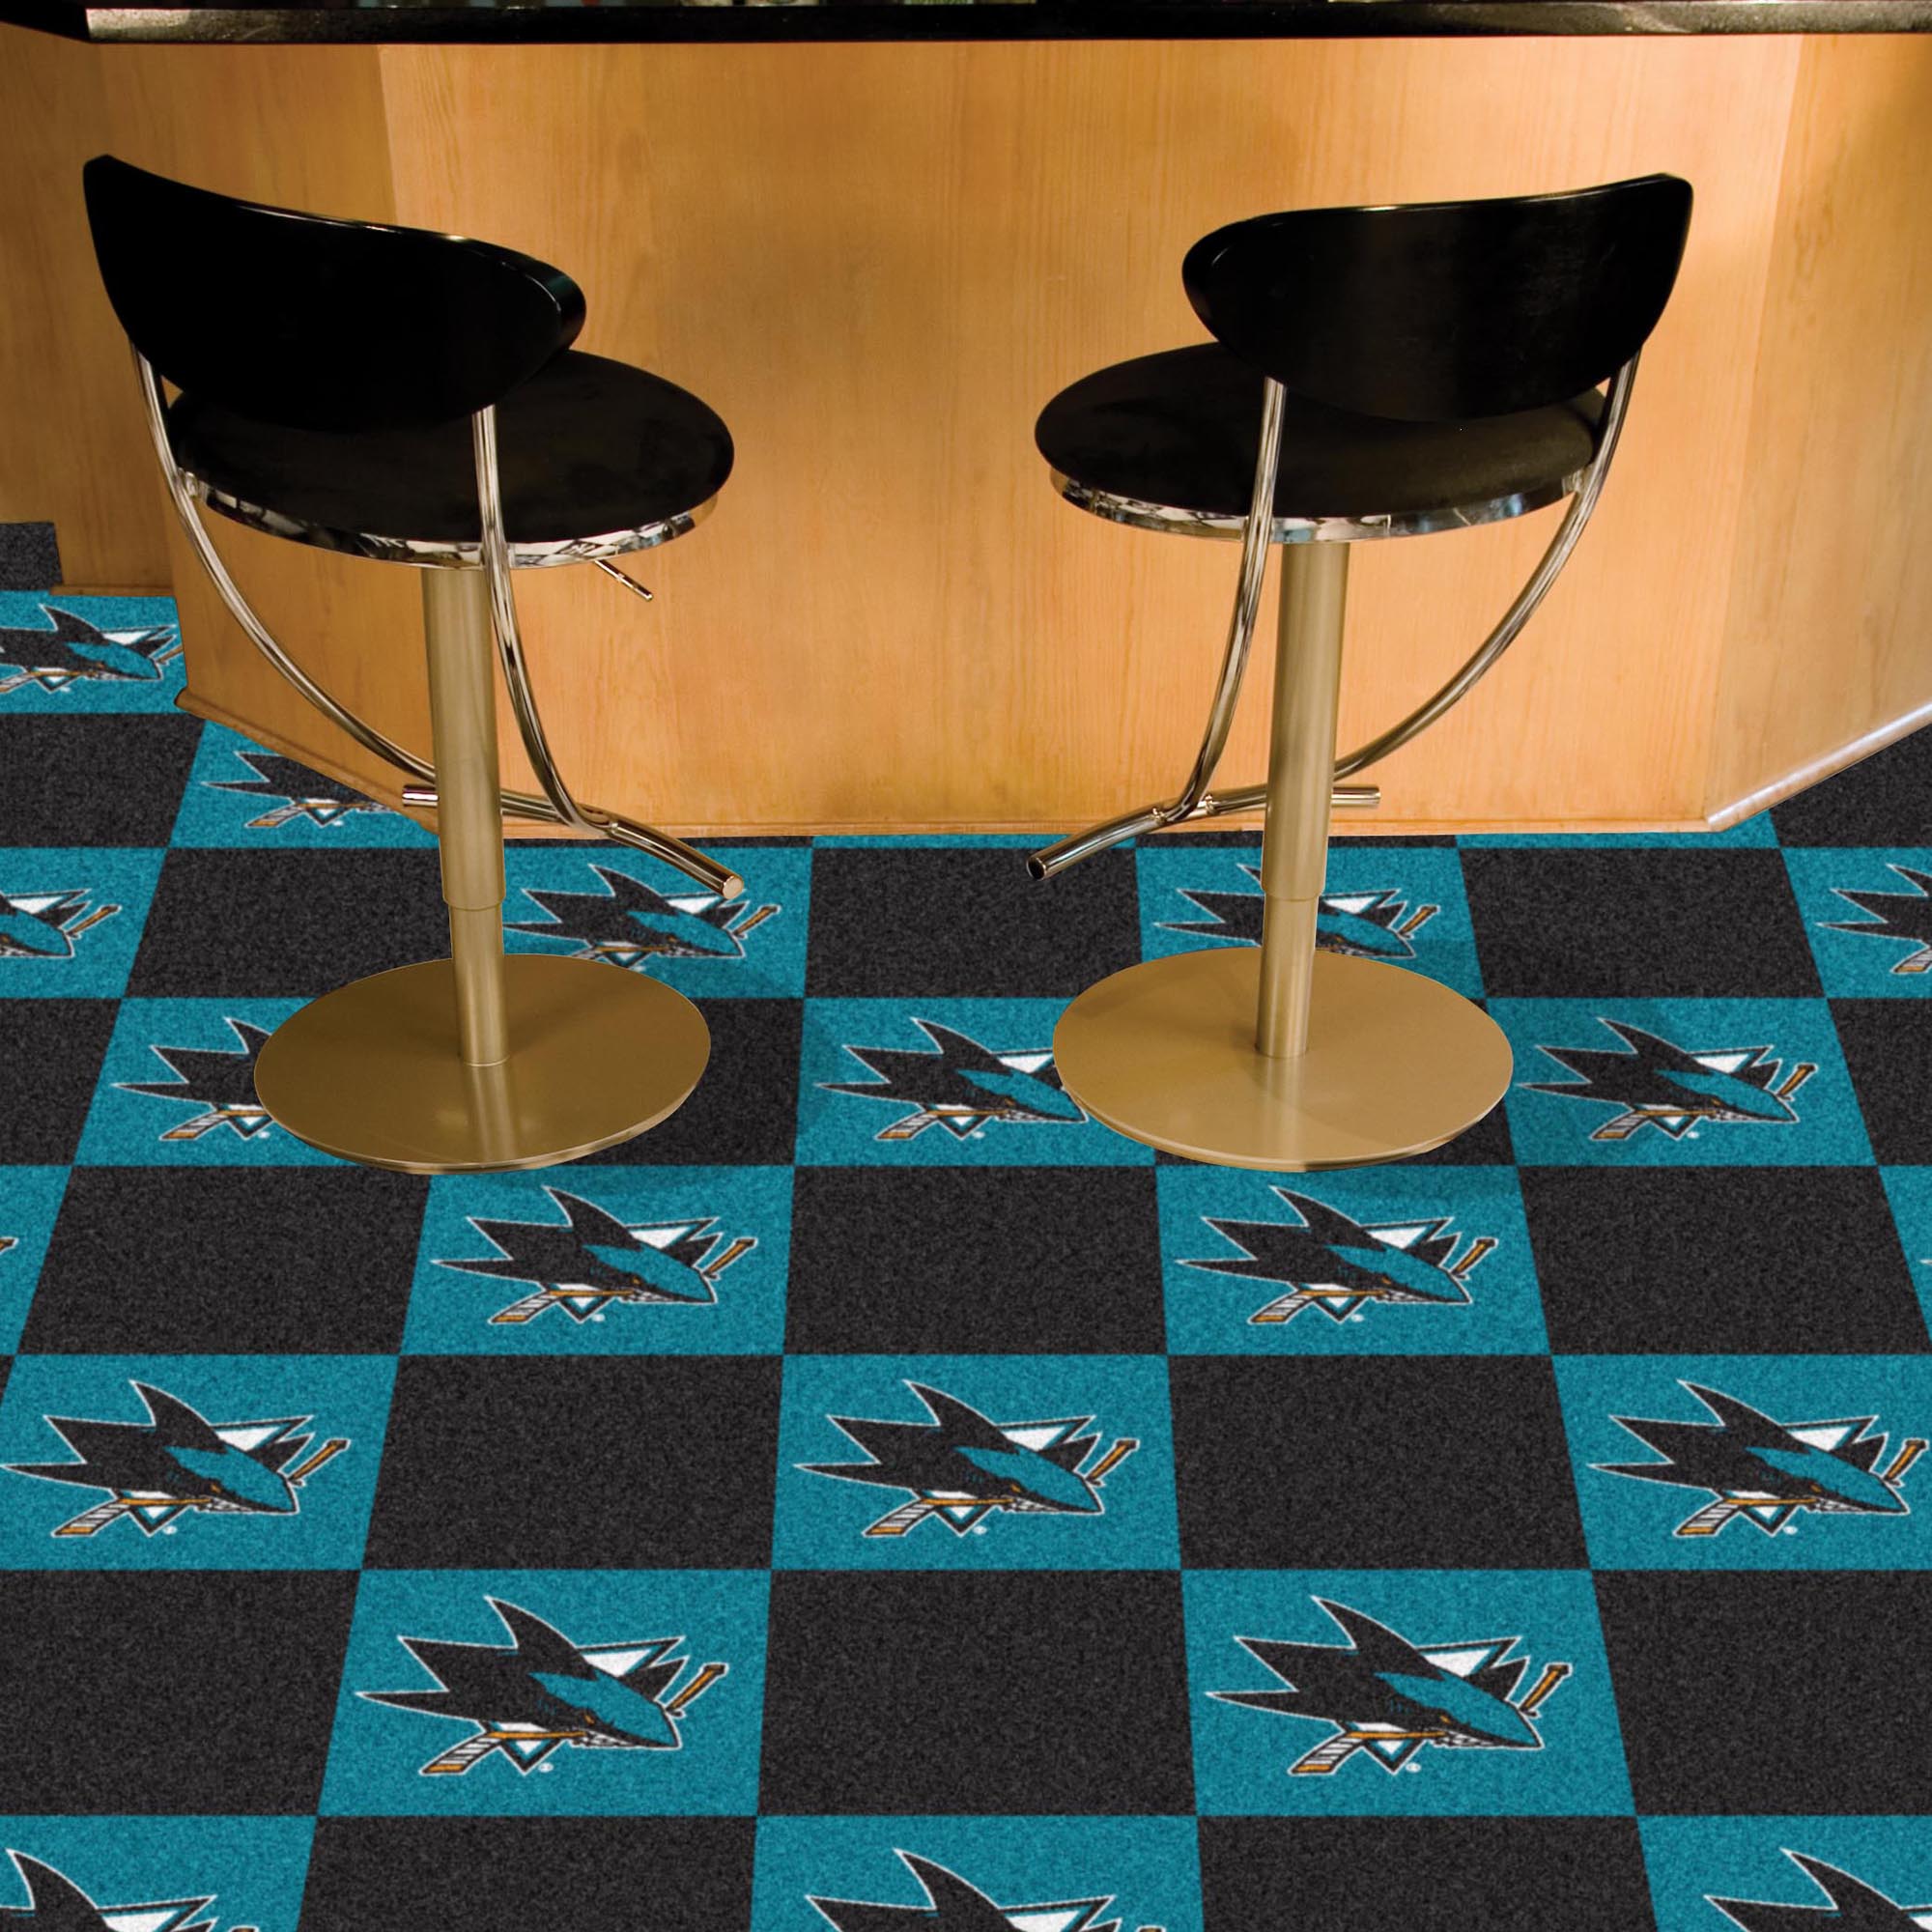 San Jose Sharks Carpet Tiles 18x18 in.